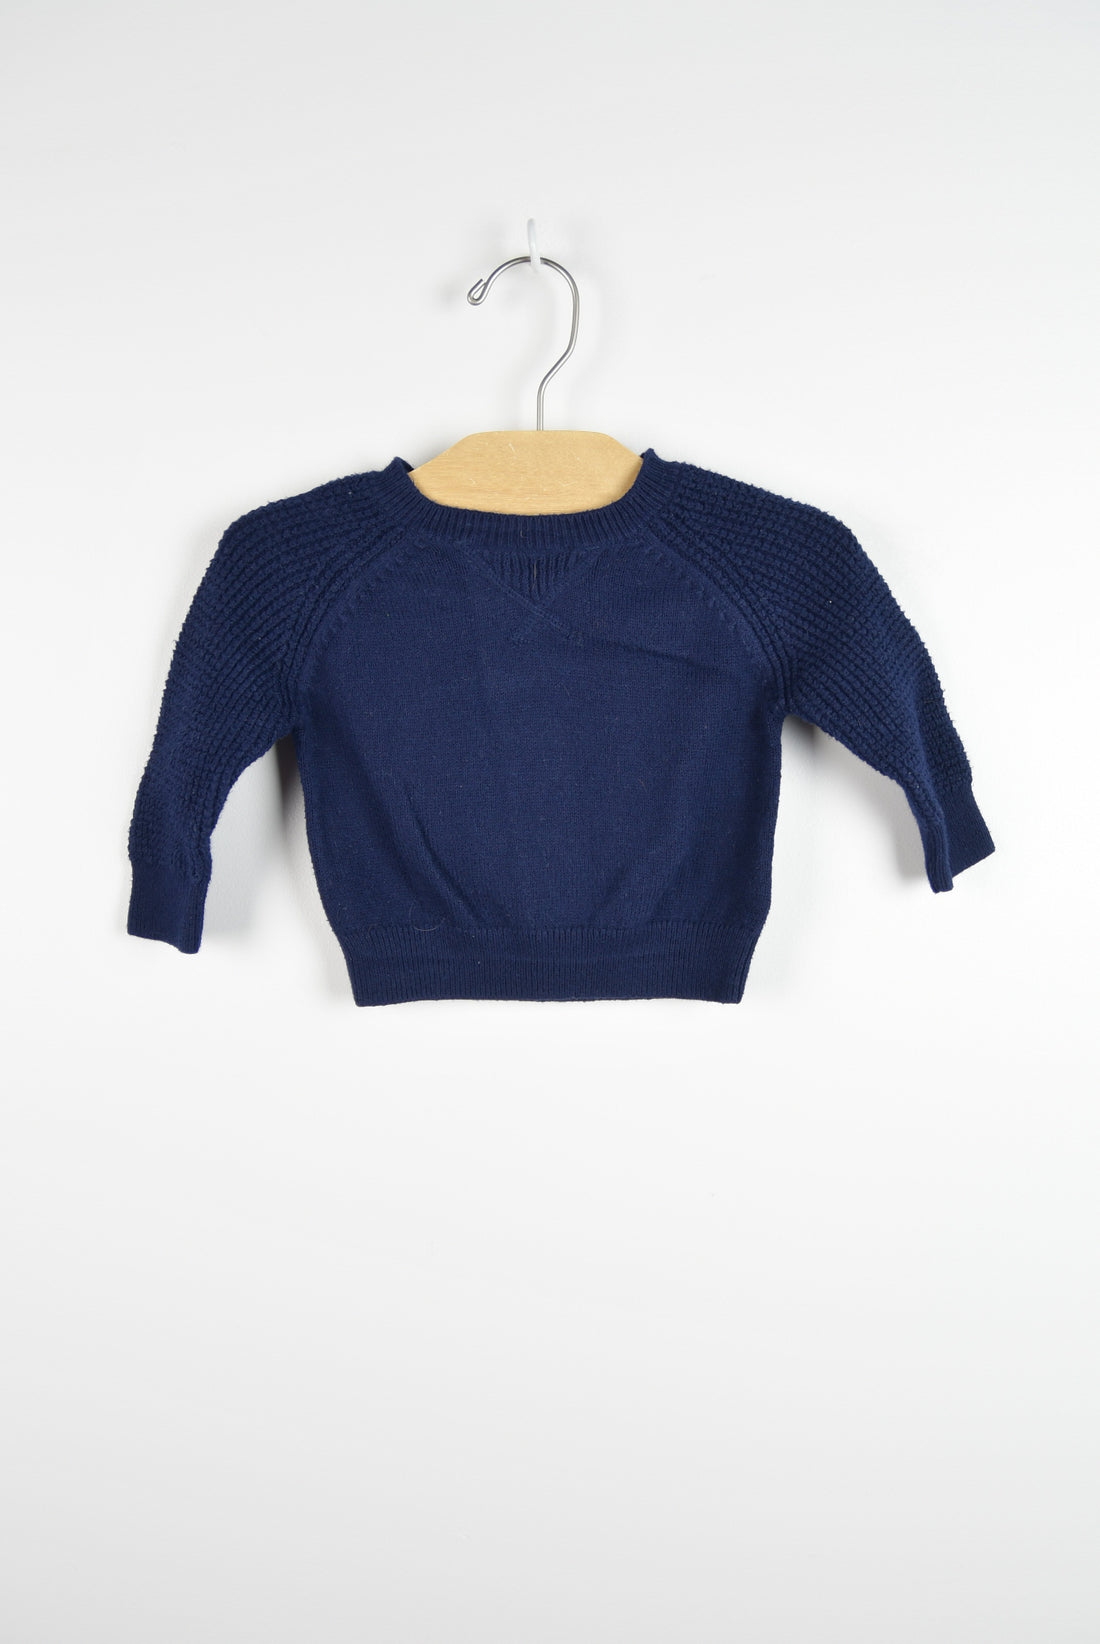 Gap Knit Sweater (3-6M)